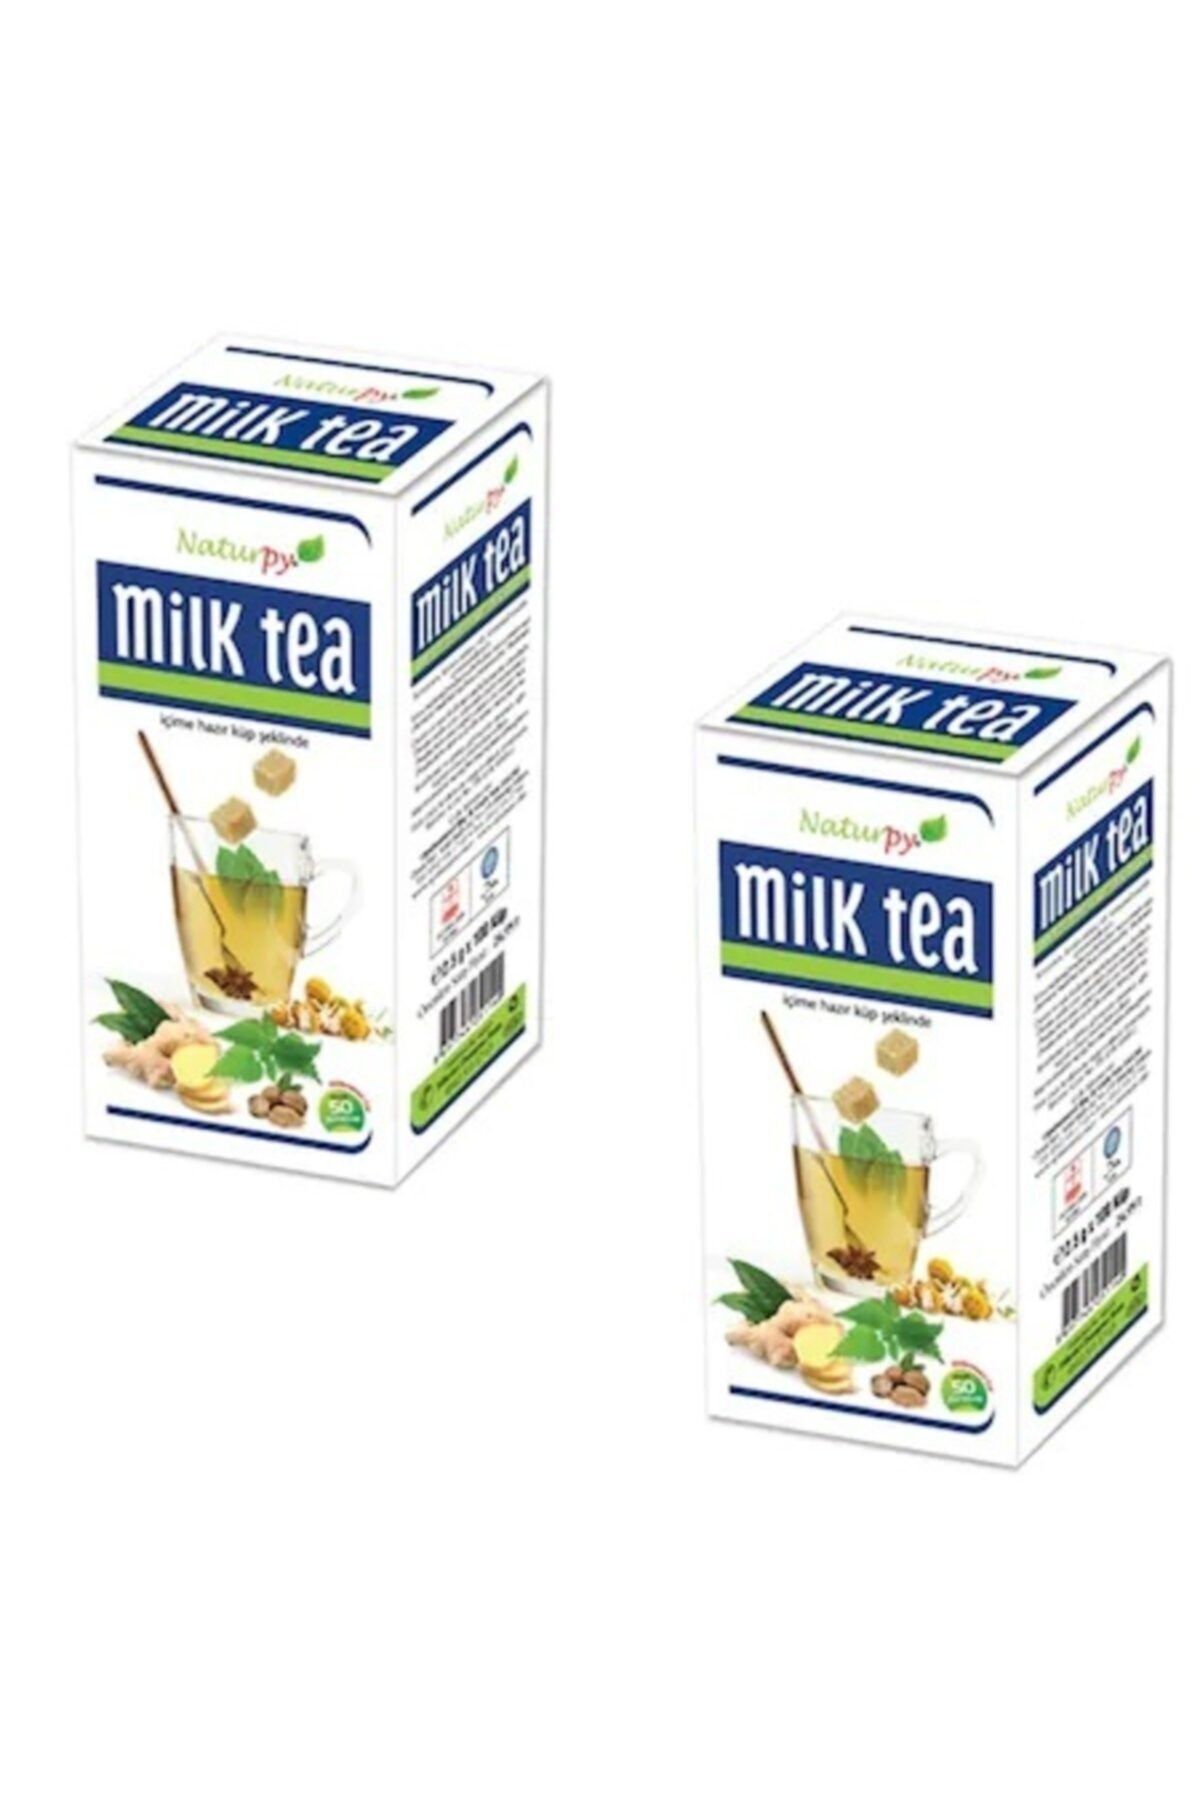 Naturpy 2 Adet Milk Tea 250 Gr - Emziren Anneler Için